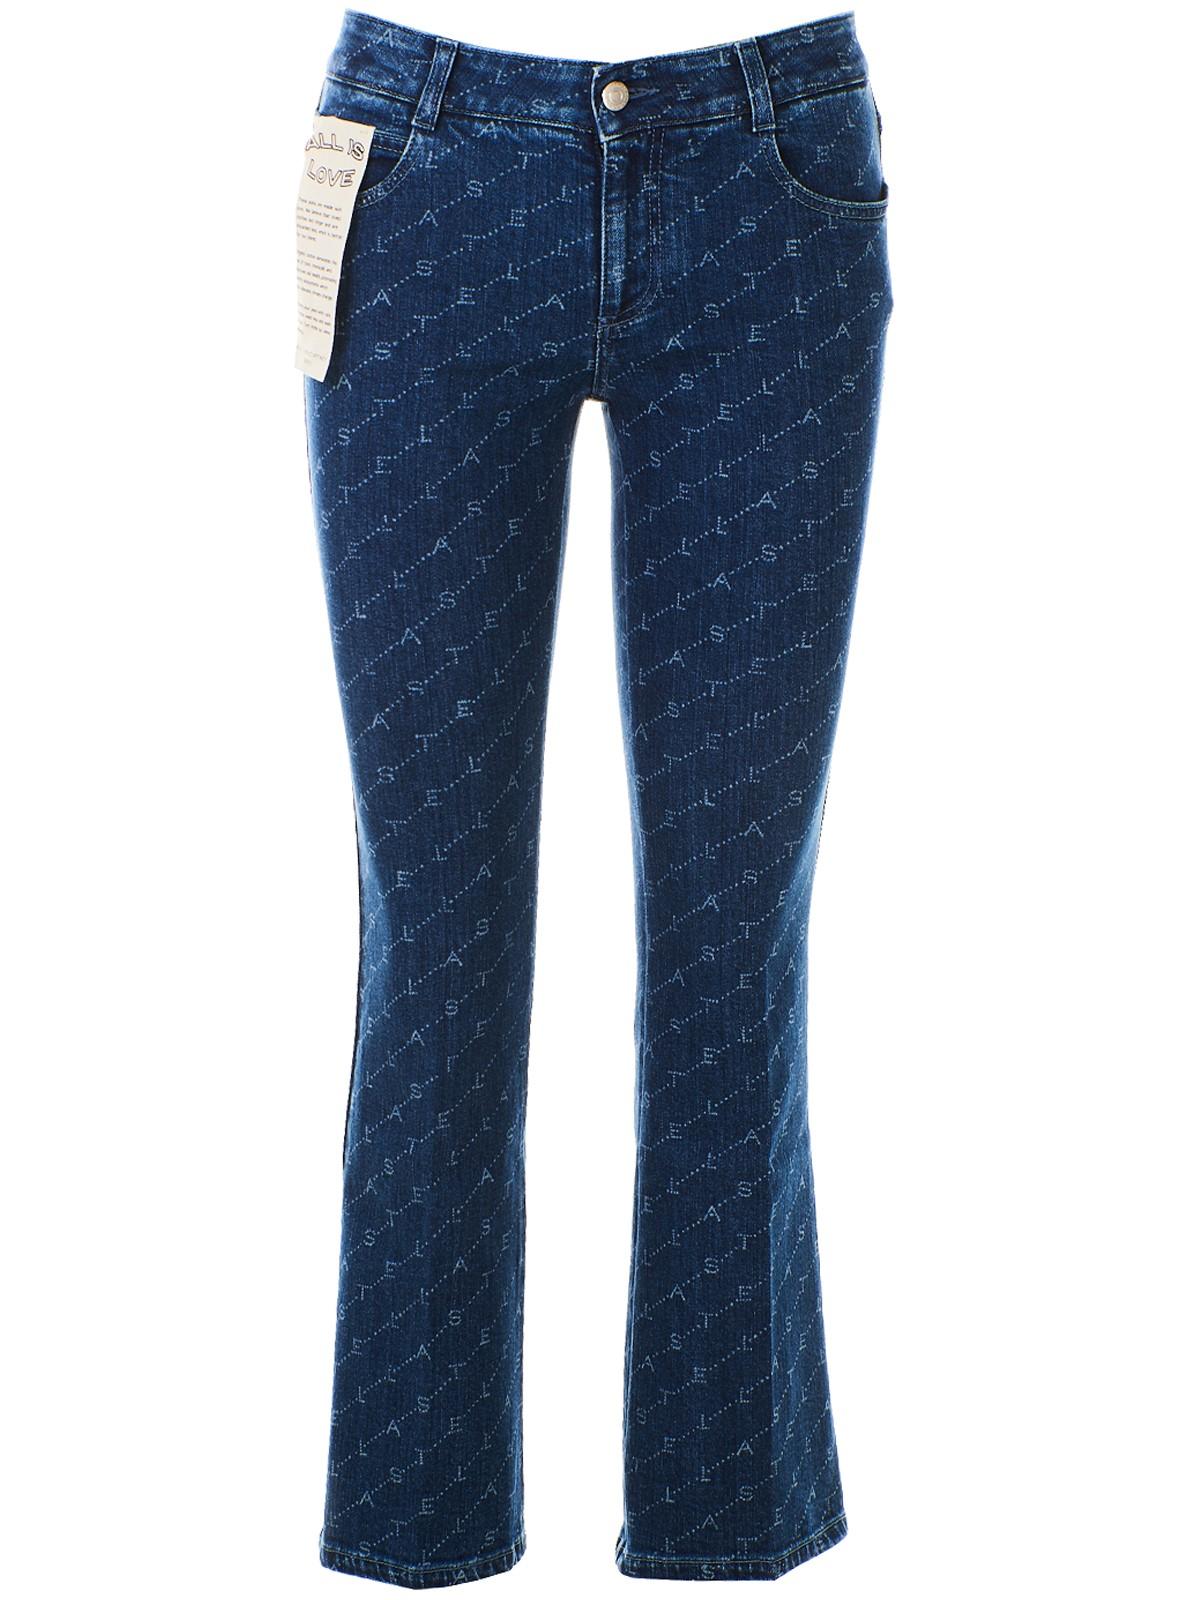 Lyst - Stella McCartney Blue Jeans in Blue - Save 1%